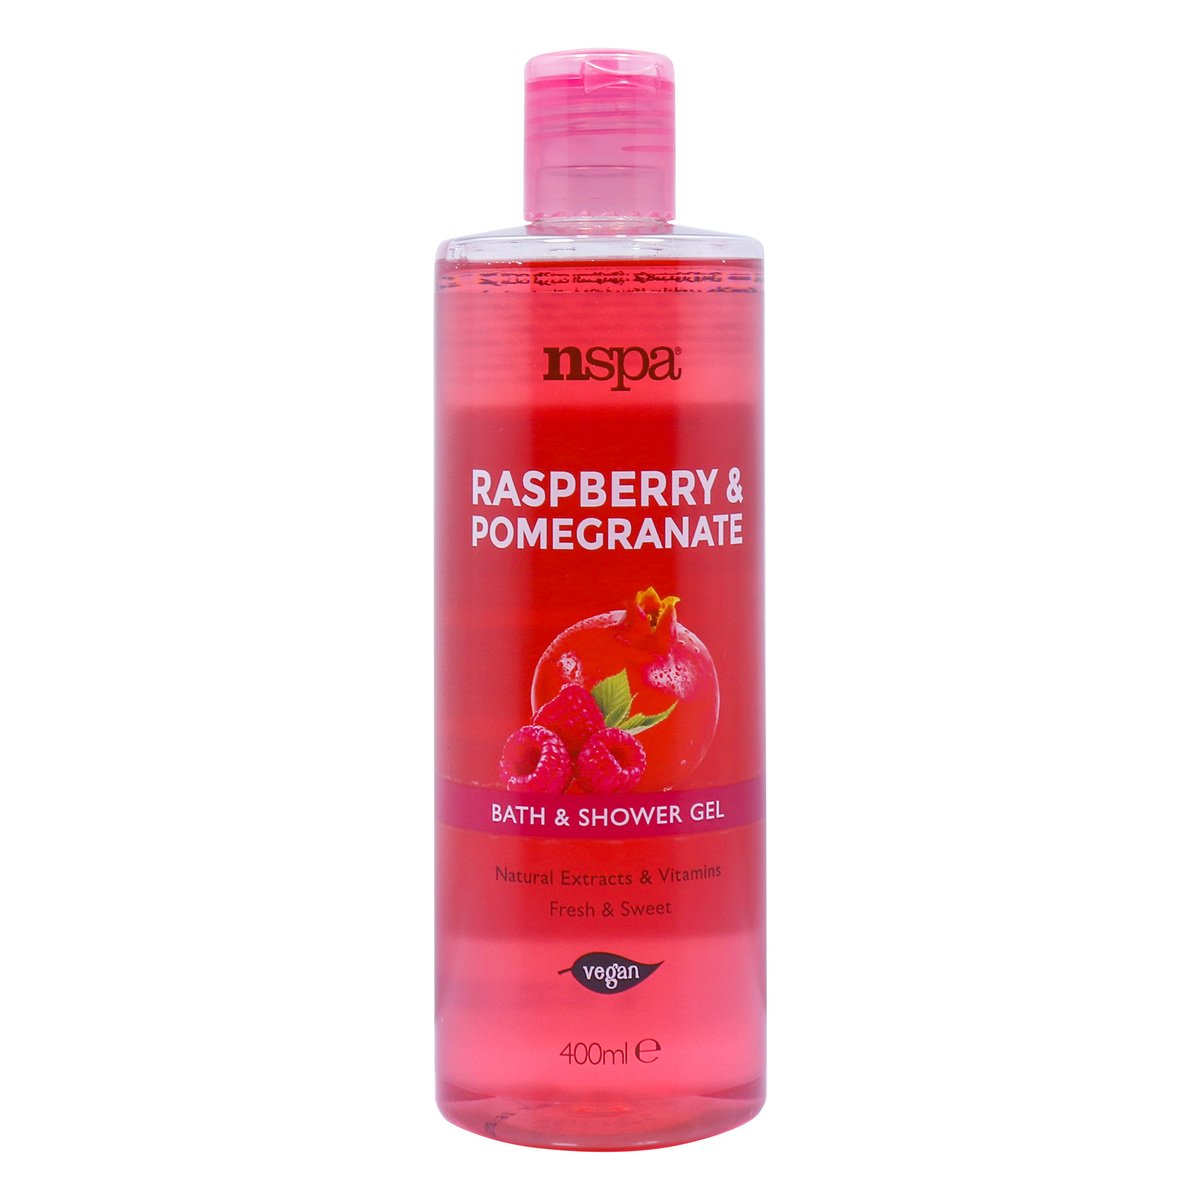 Nspa Raspberry & Pomegranate Bath & Shower Gel 400ml